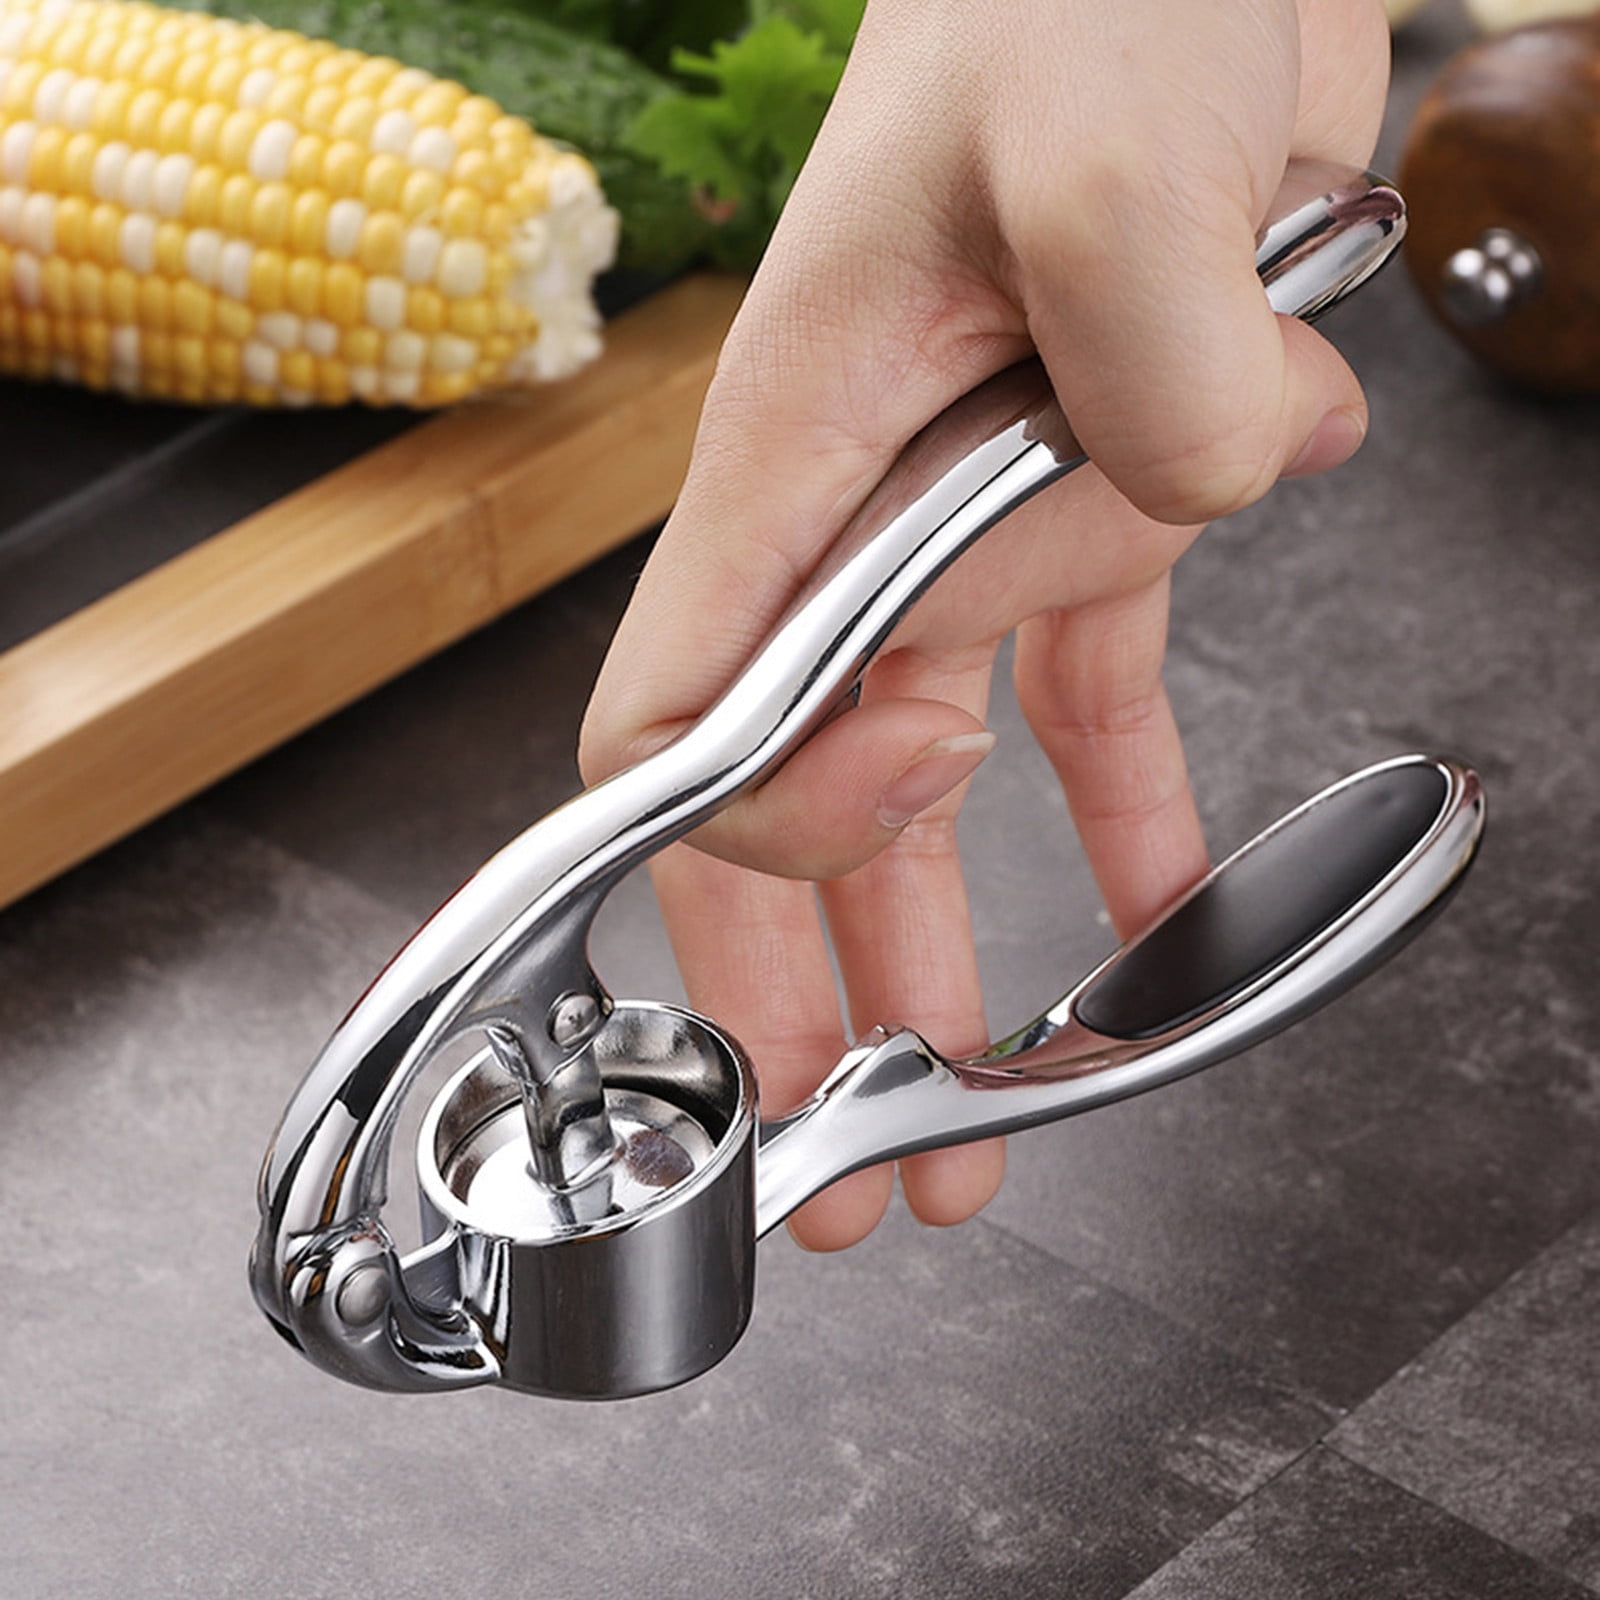 Stainless steel manual garlic press crusher squeezer masher home kitchen tool HK 